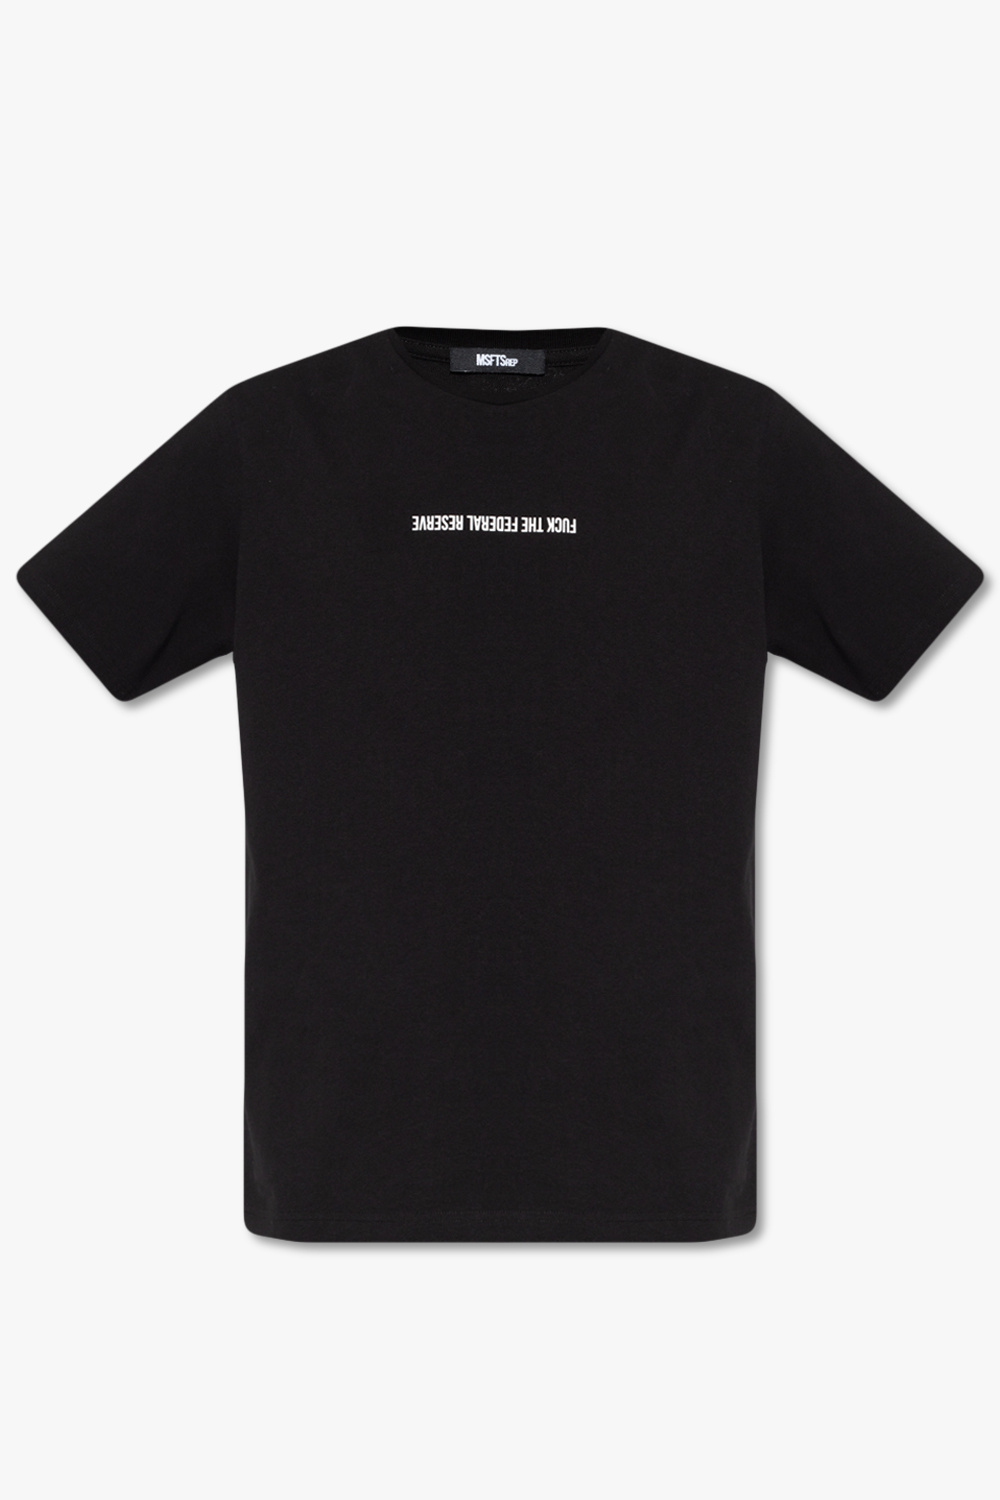 StclaircomoShops NC - Black Printed T - shirt MSFTSrep - Alexander McQueen  Pullover mit Herzausschnitt Nude